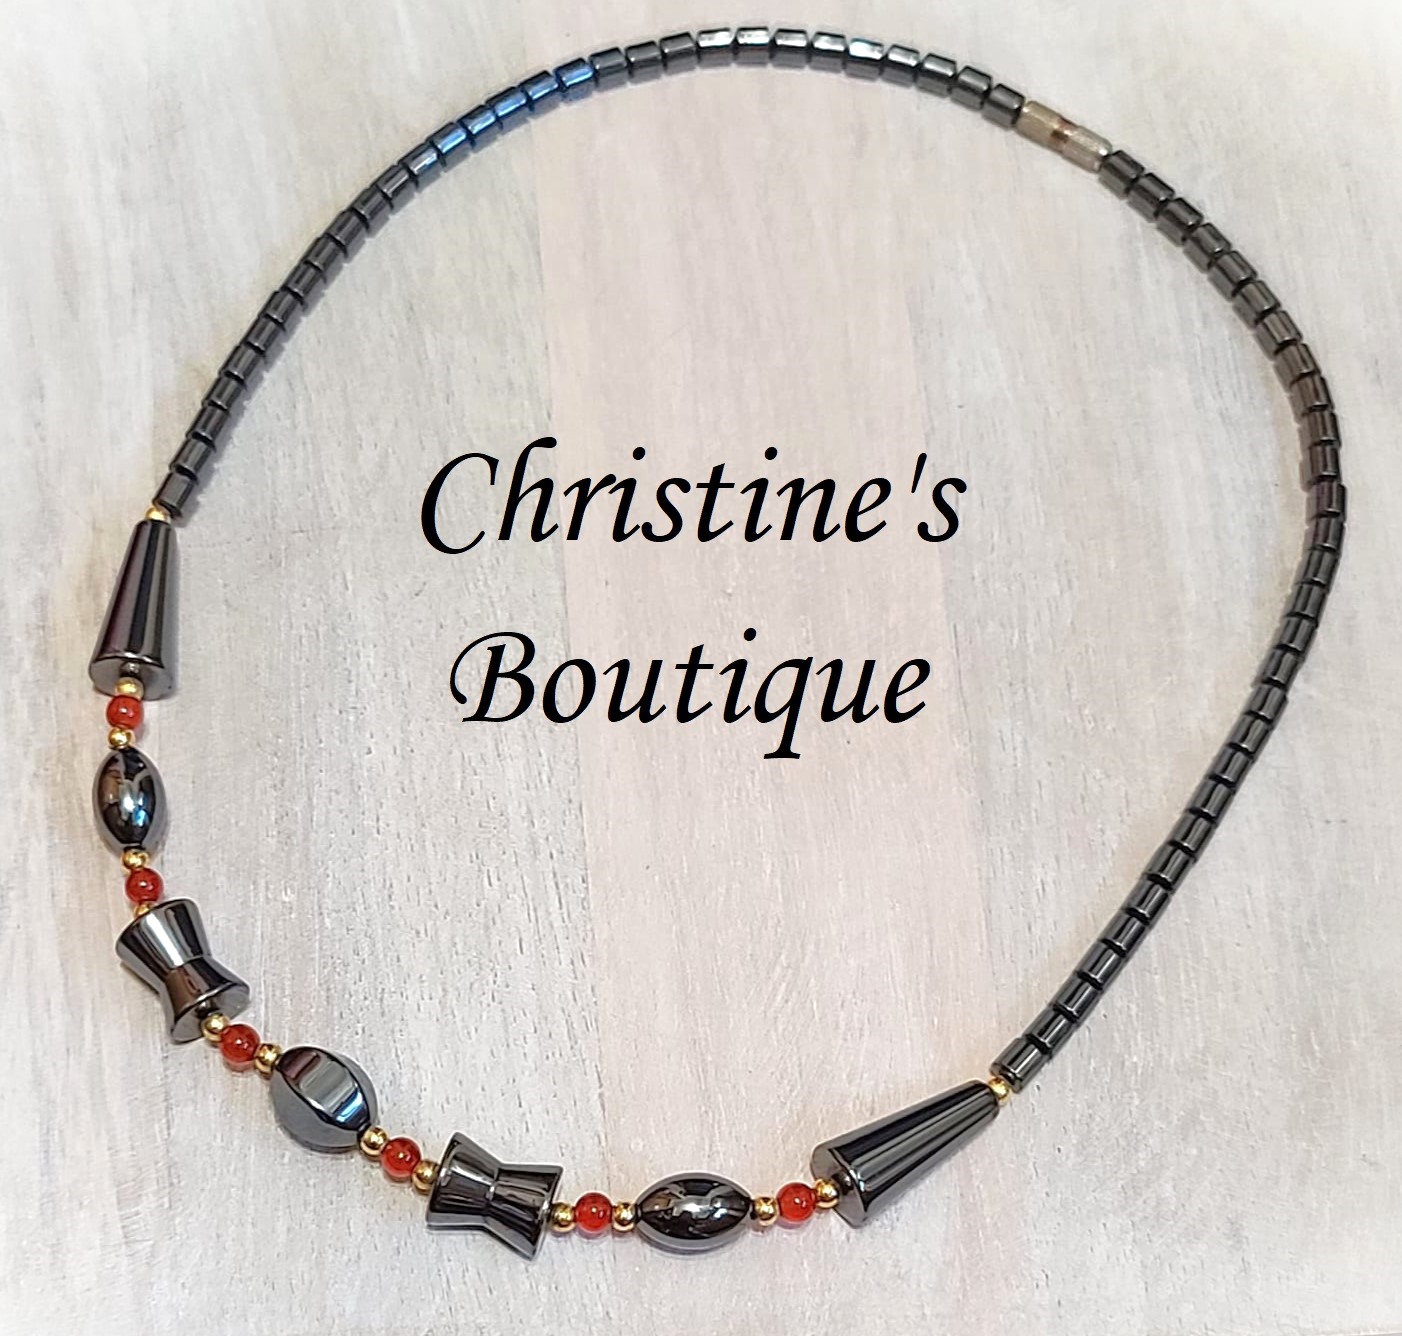 Hematite Necklace with Citrine Stone Beads 19"